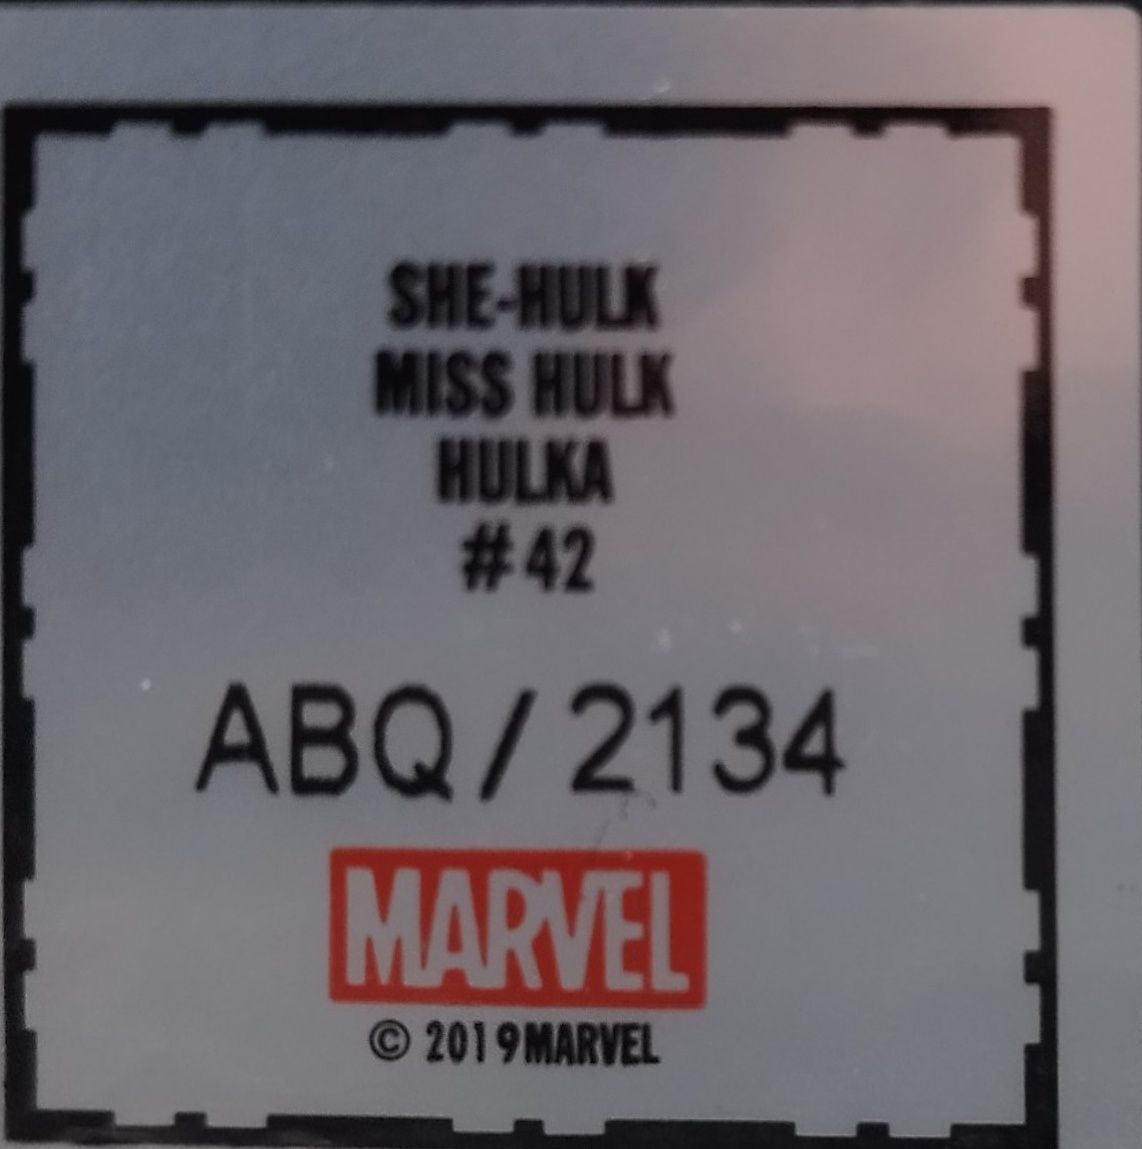 Figurka Marvel klasyczna She-Hulk #42  ok 8 cm figurka w oryginalnym